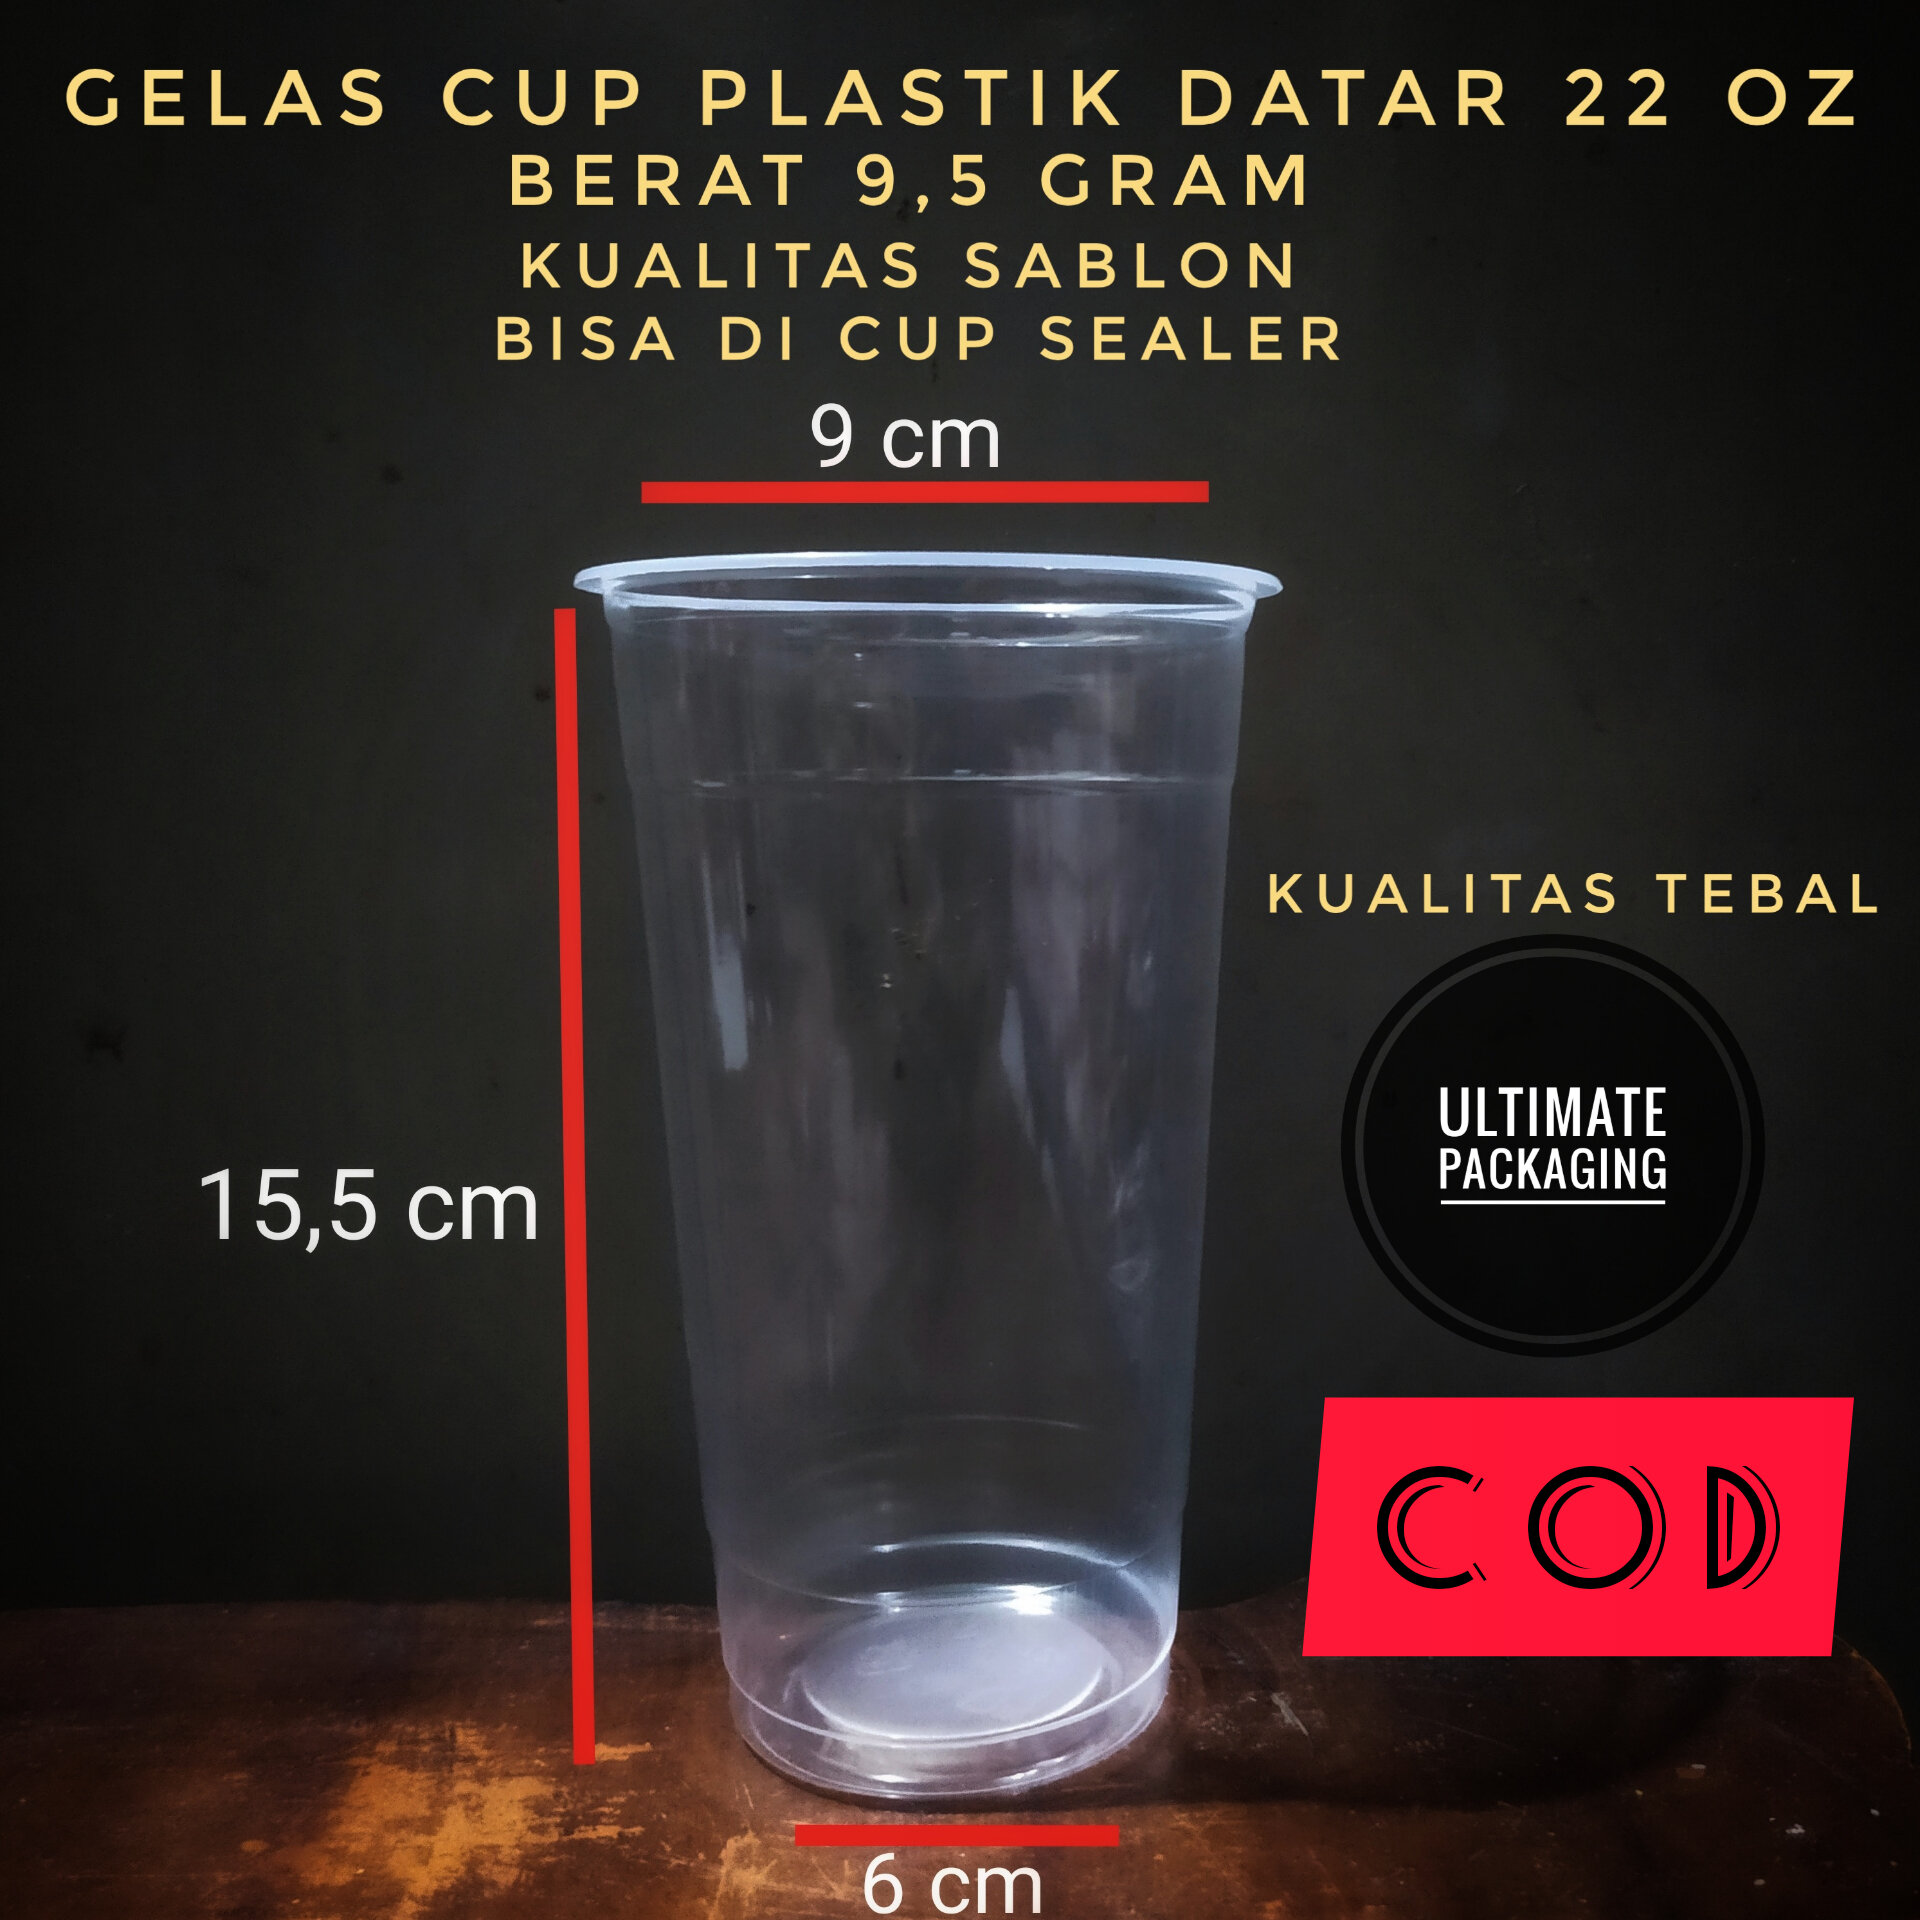 Gelas Cup Plastik Datar 22 Oz Isi 50 Pcs Lazada Indonesia 2103